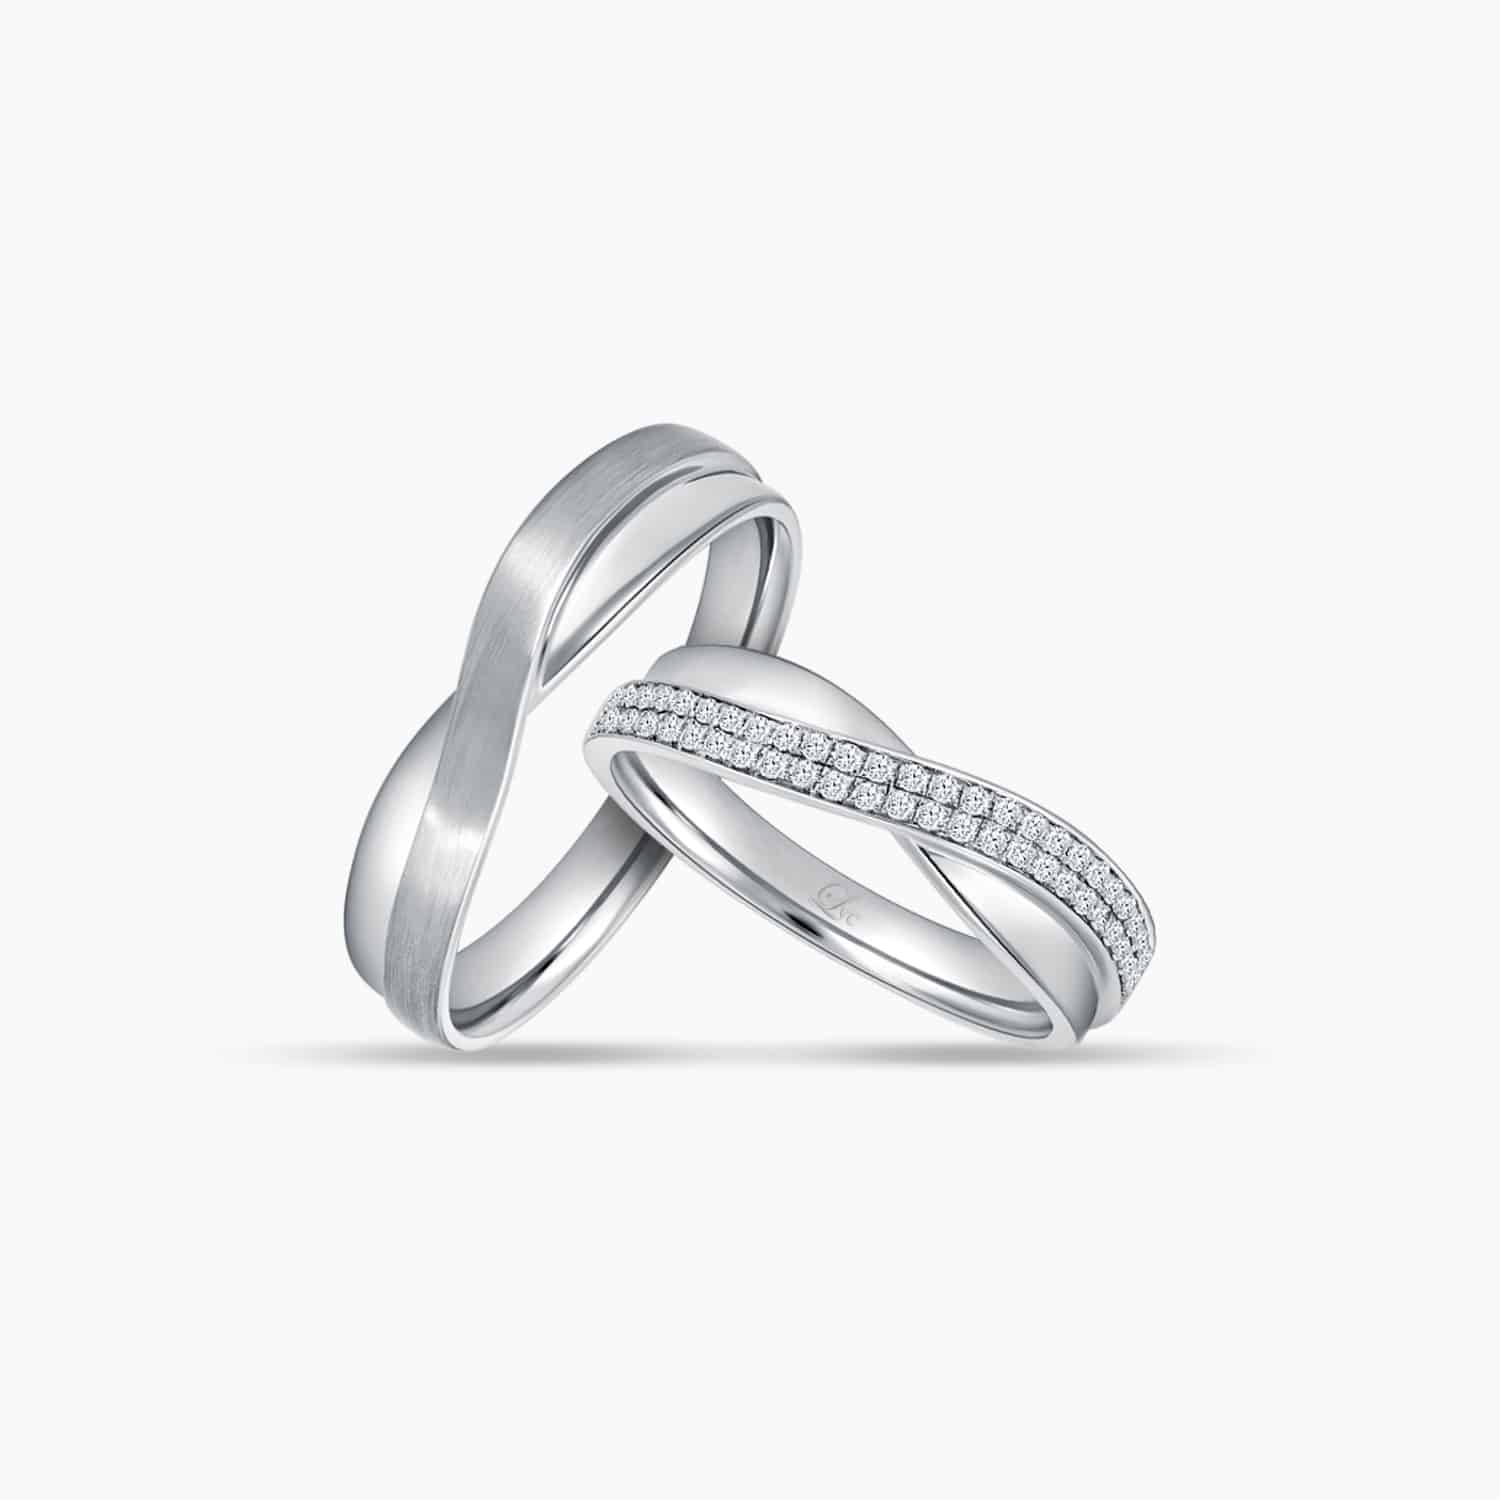 LVC Desirio Cross Couple Wedding Ring Set in White Gold with a Dual Array of Diamonds